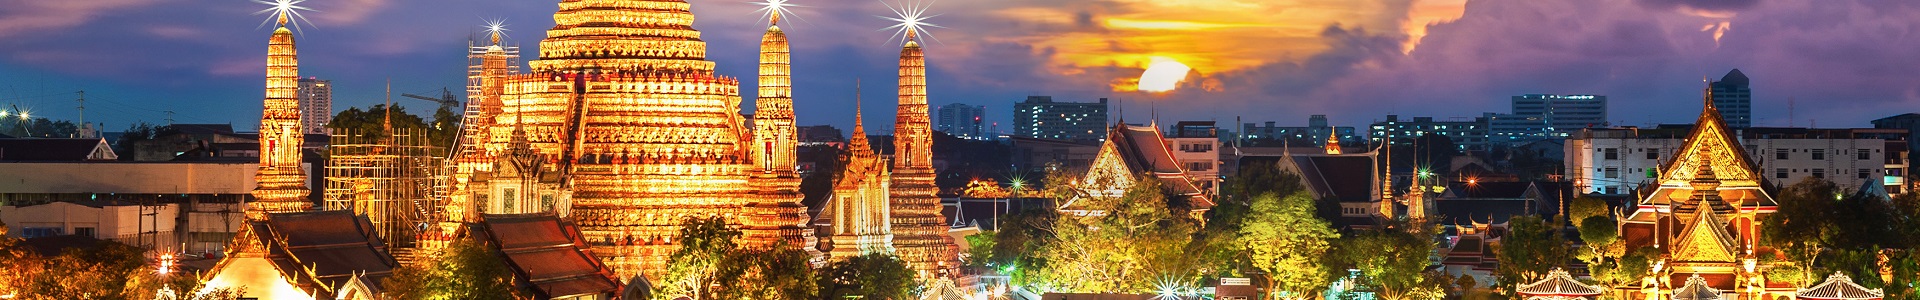 Wat Arun night view Temple in bangkok, Thailand..